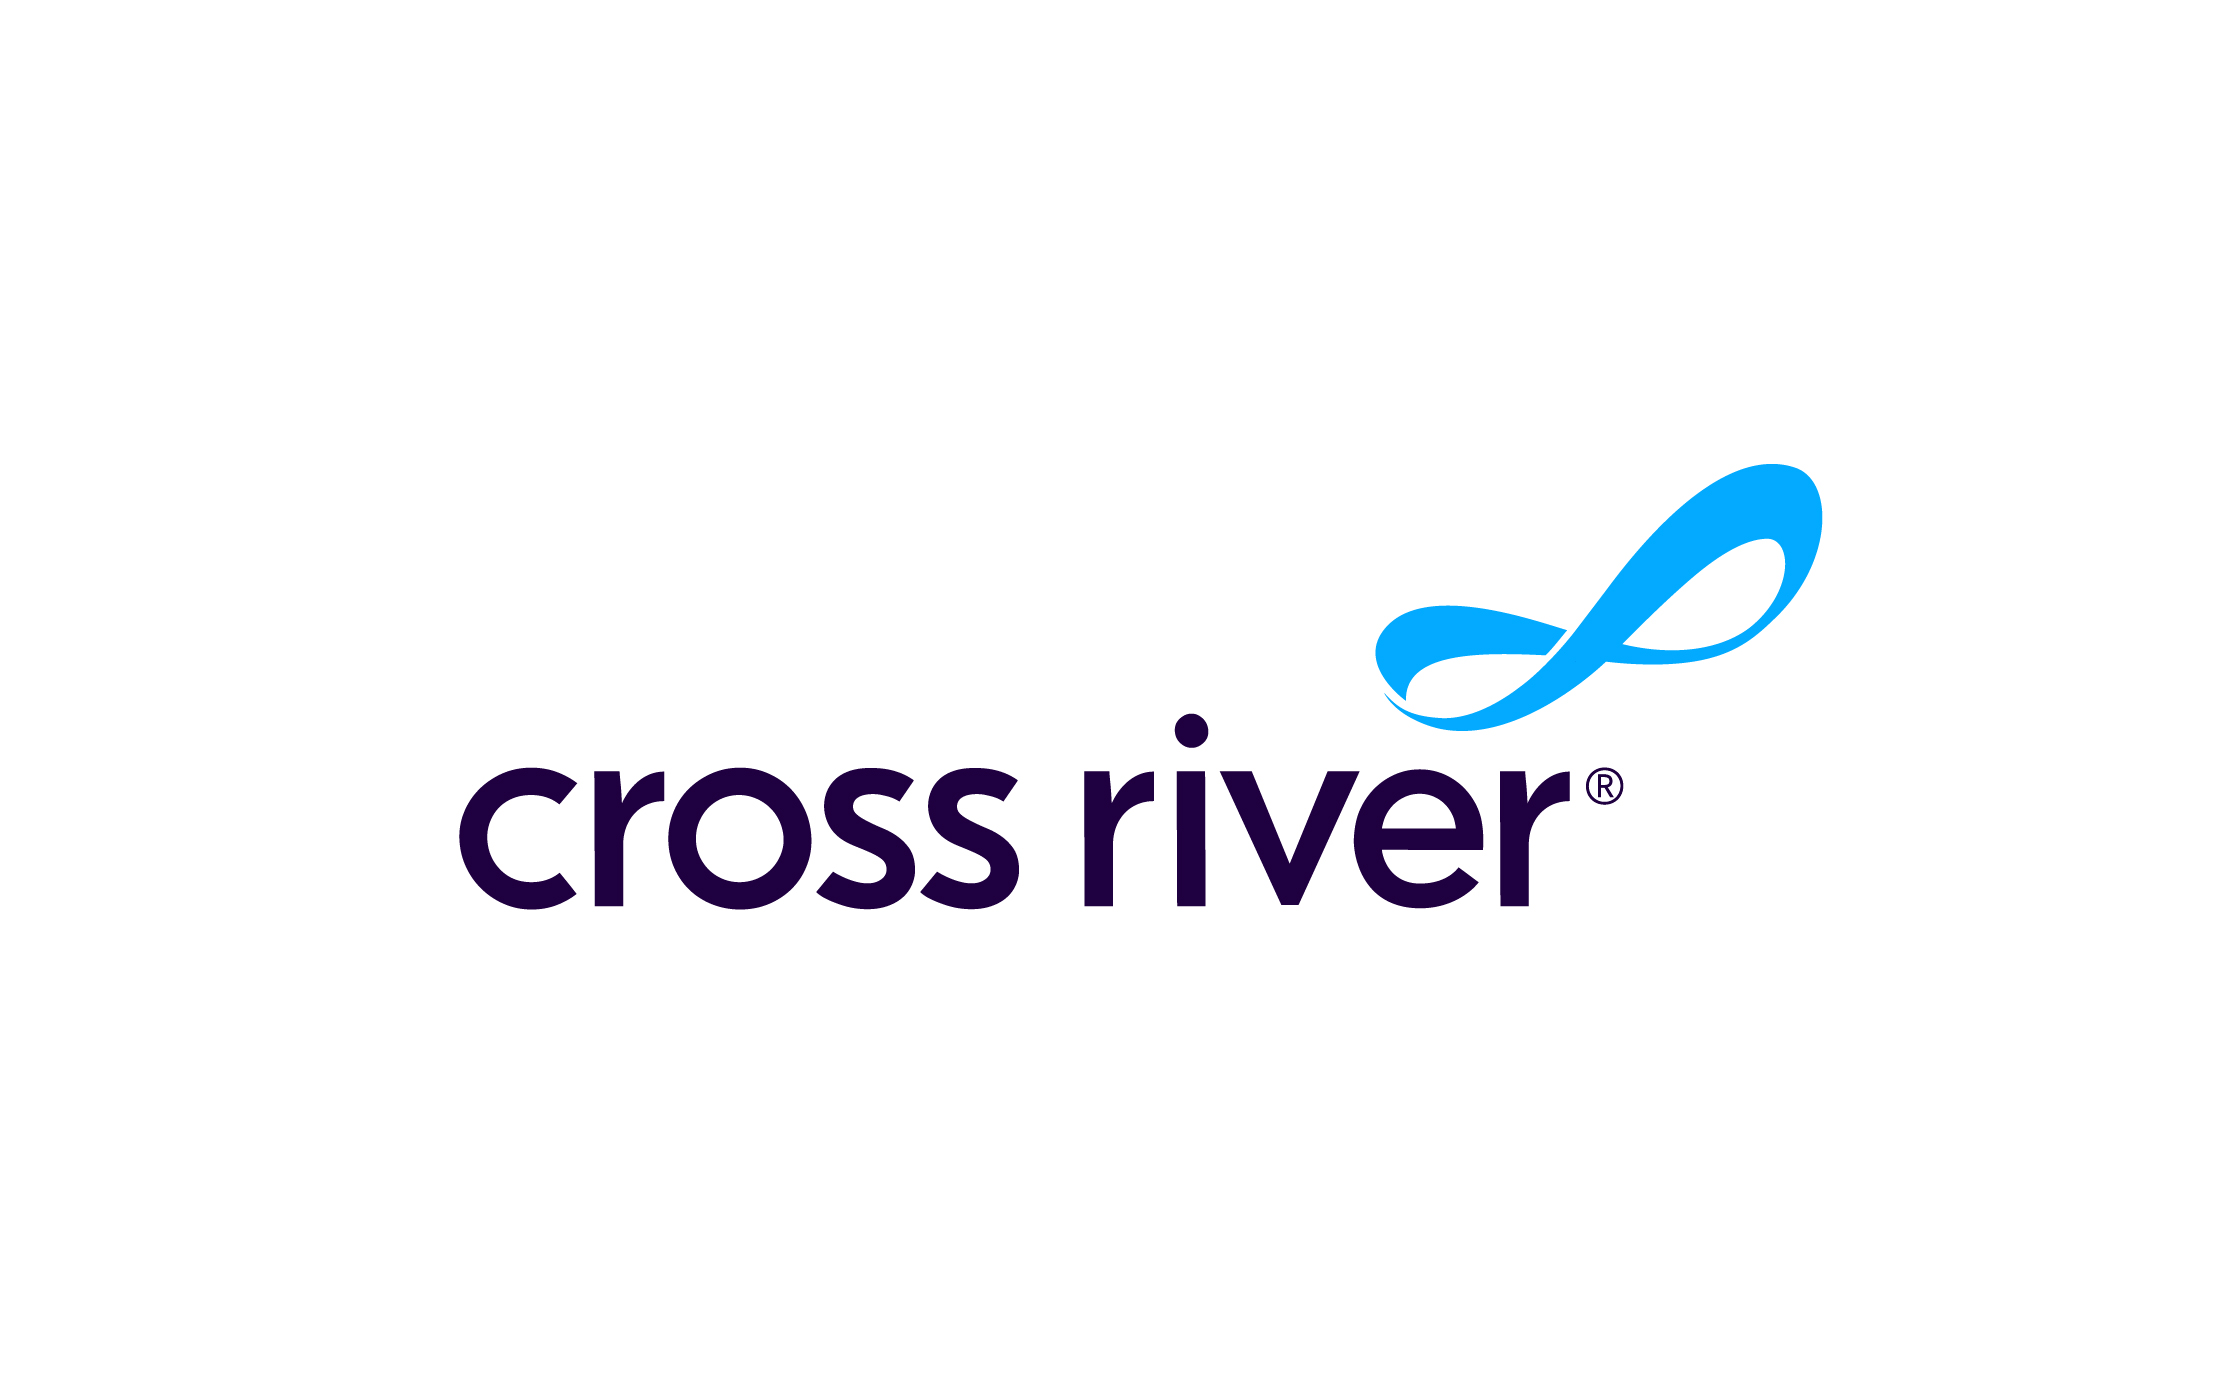 Cross River Bank, Inc.